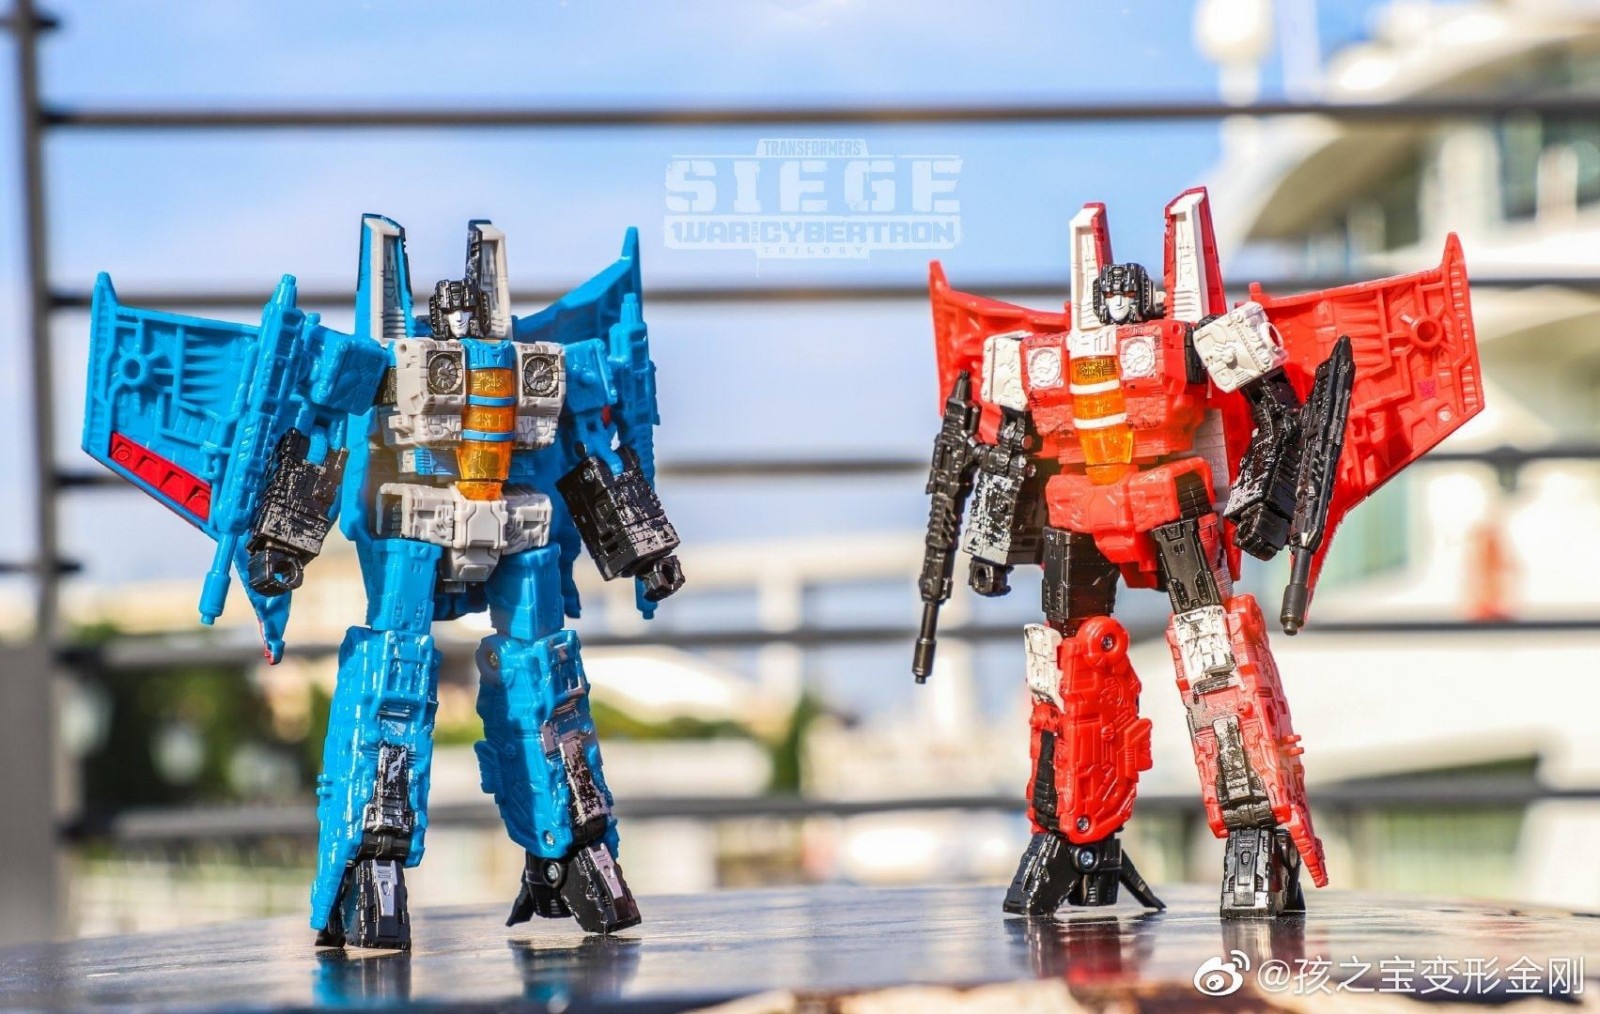 Red transformer. Ред Вингс трансформер Siege. Ред Винг трансформер g1. Transformers Siege Red Wing. Трансформер Transformers Transformers Generations selects игрушки.